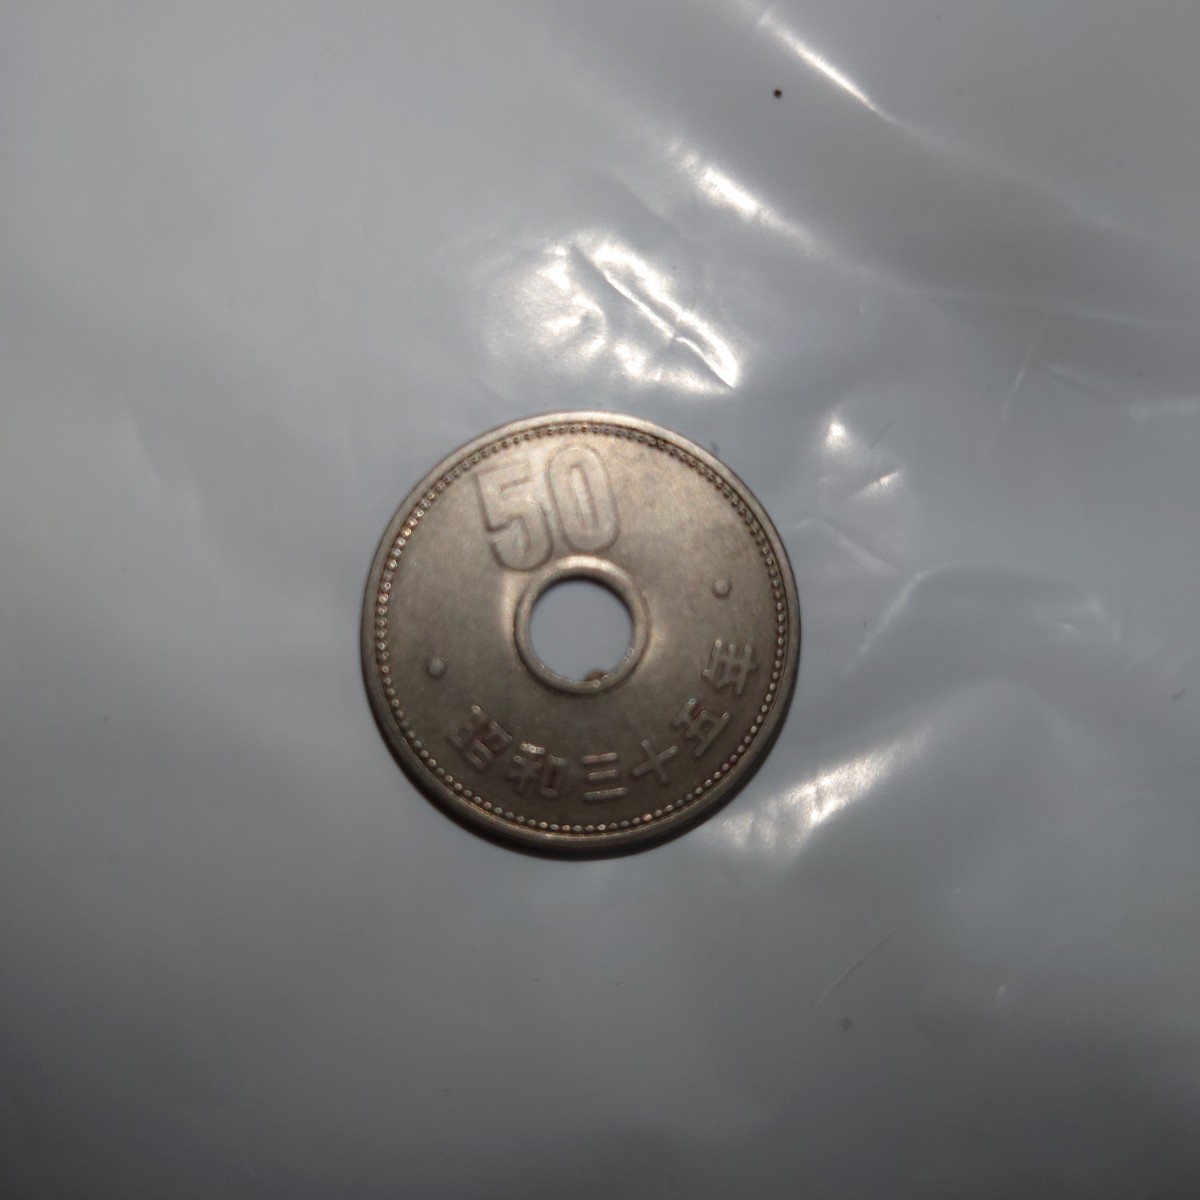 菊穴ナシ50円 昭和31年(1956年) 美品 近代貨幣 日本 古銭 硬貨 コイン